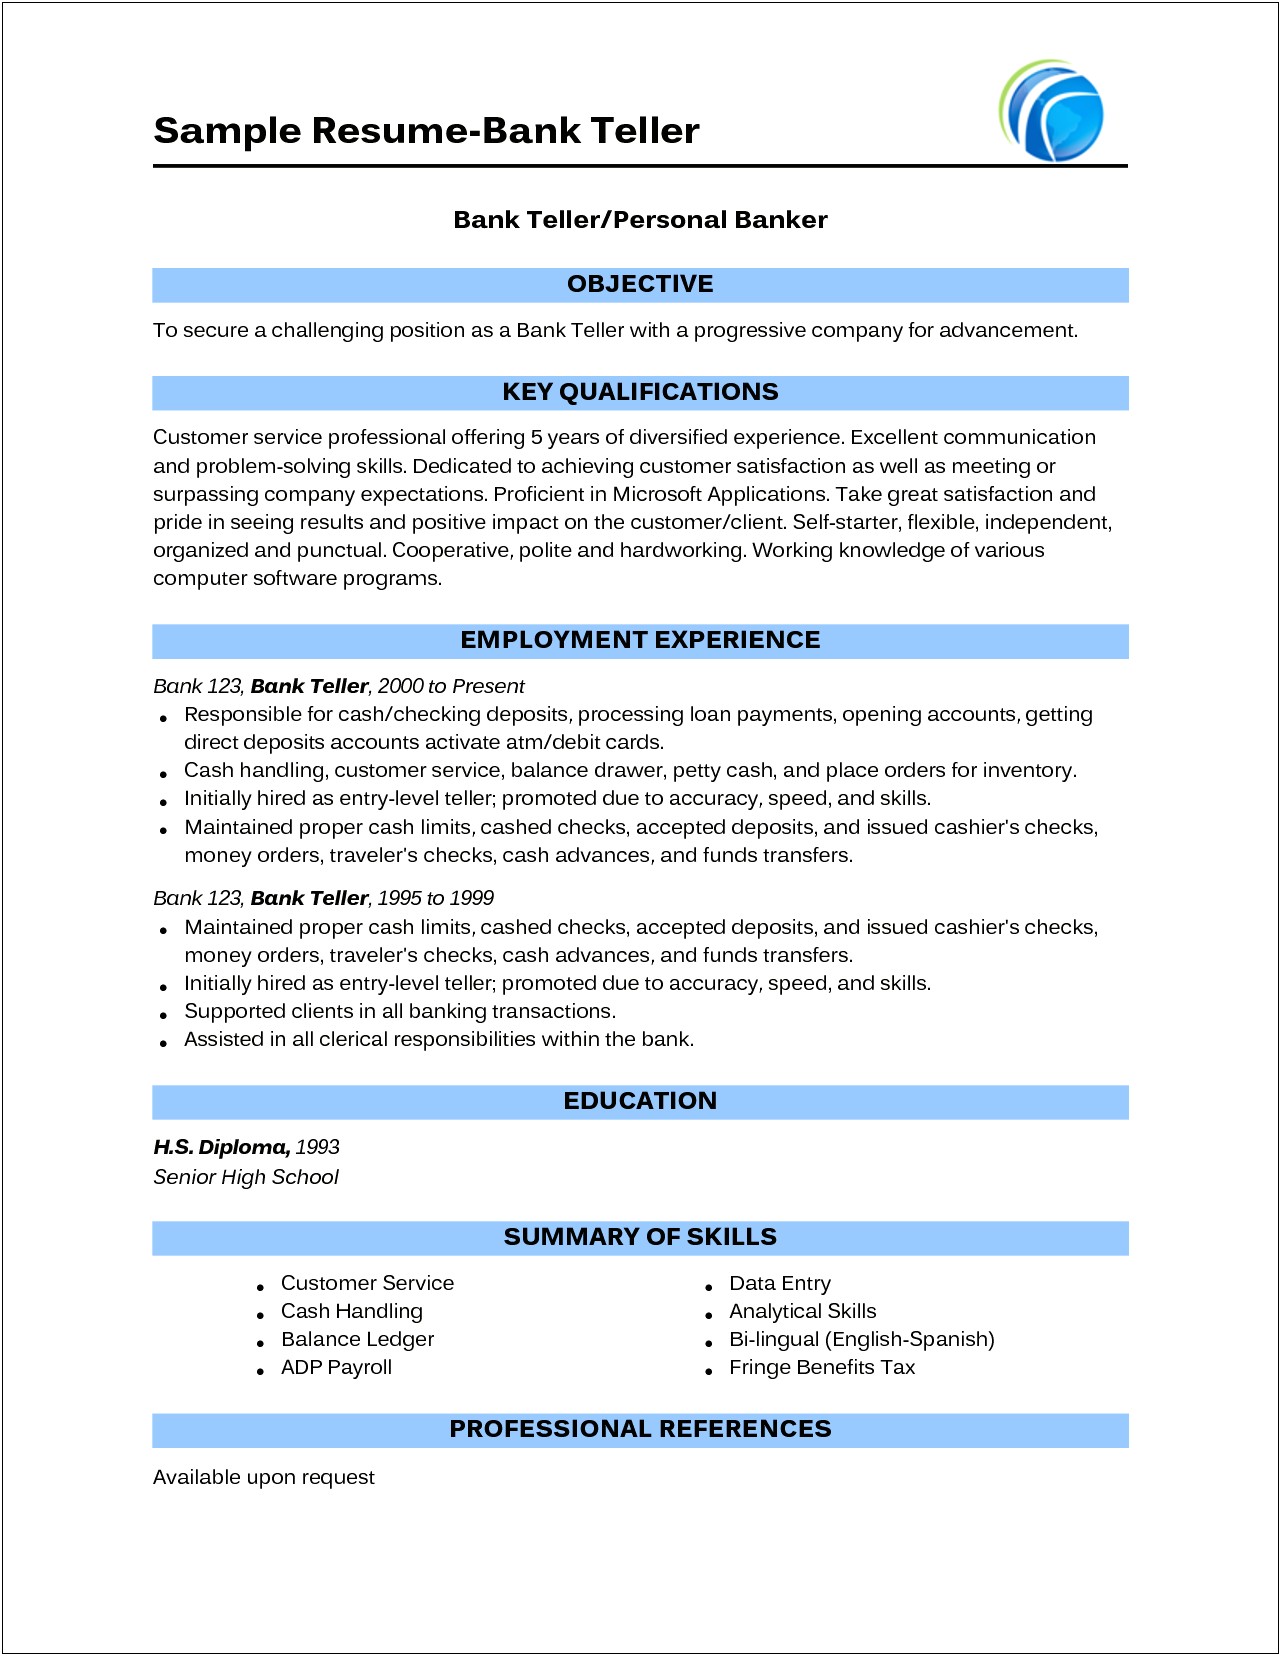 Sample Resume Bank Job Fresher